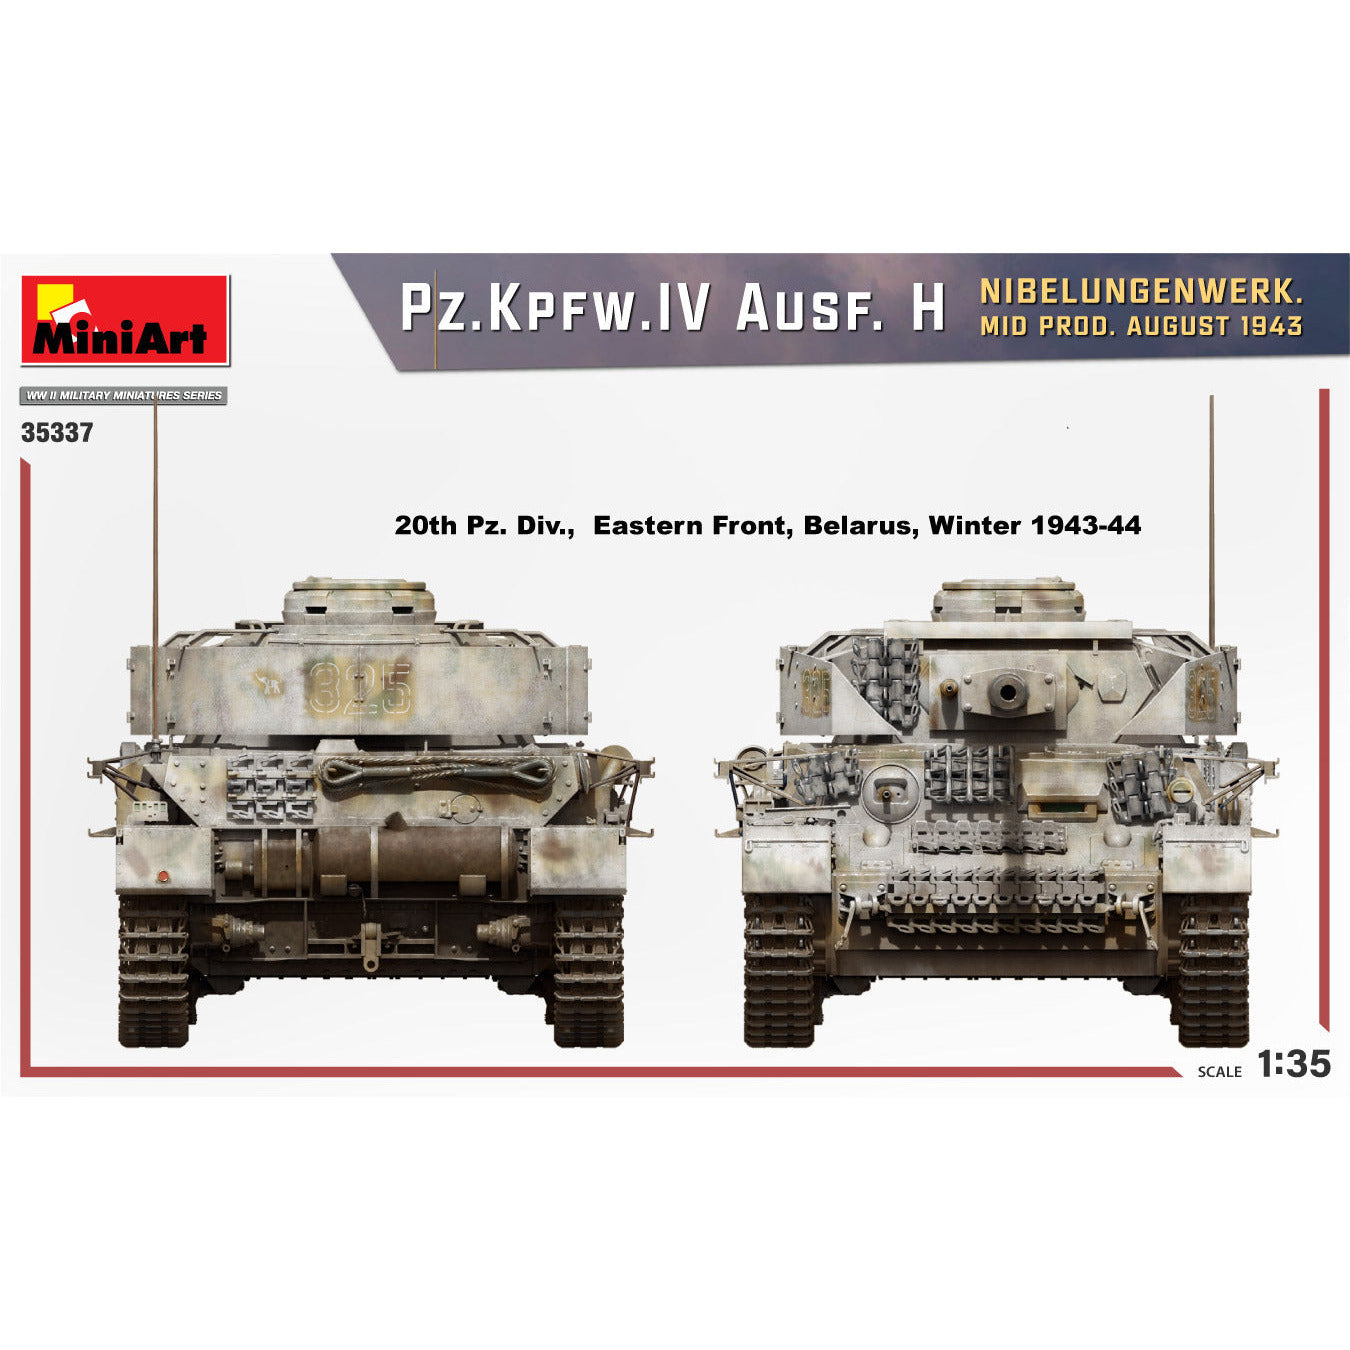 MINIART 1/35 Pz.Kpfw.IV Ausf. H Nibelungenwerk. Mid Prod. August 1943